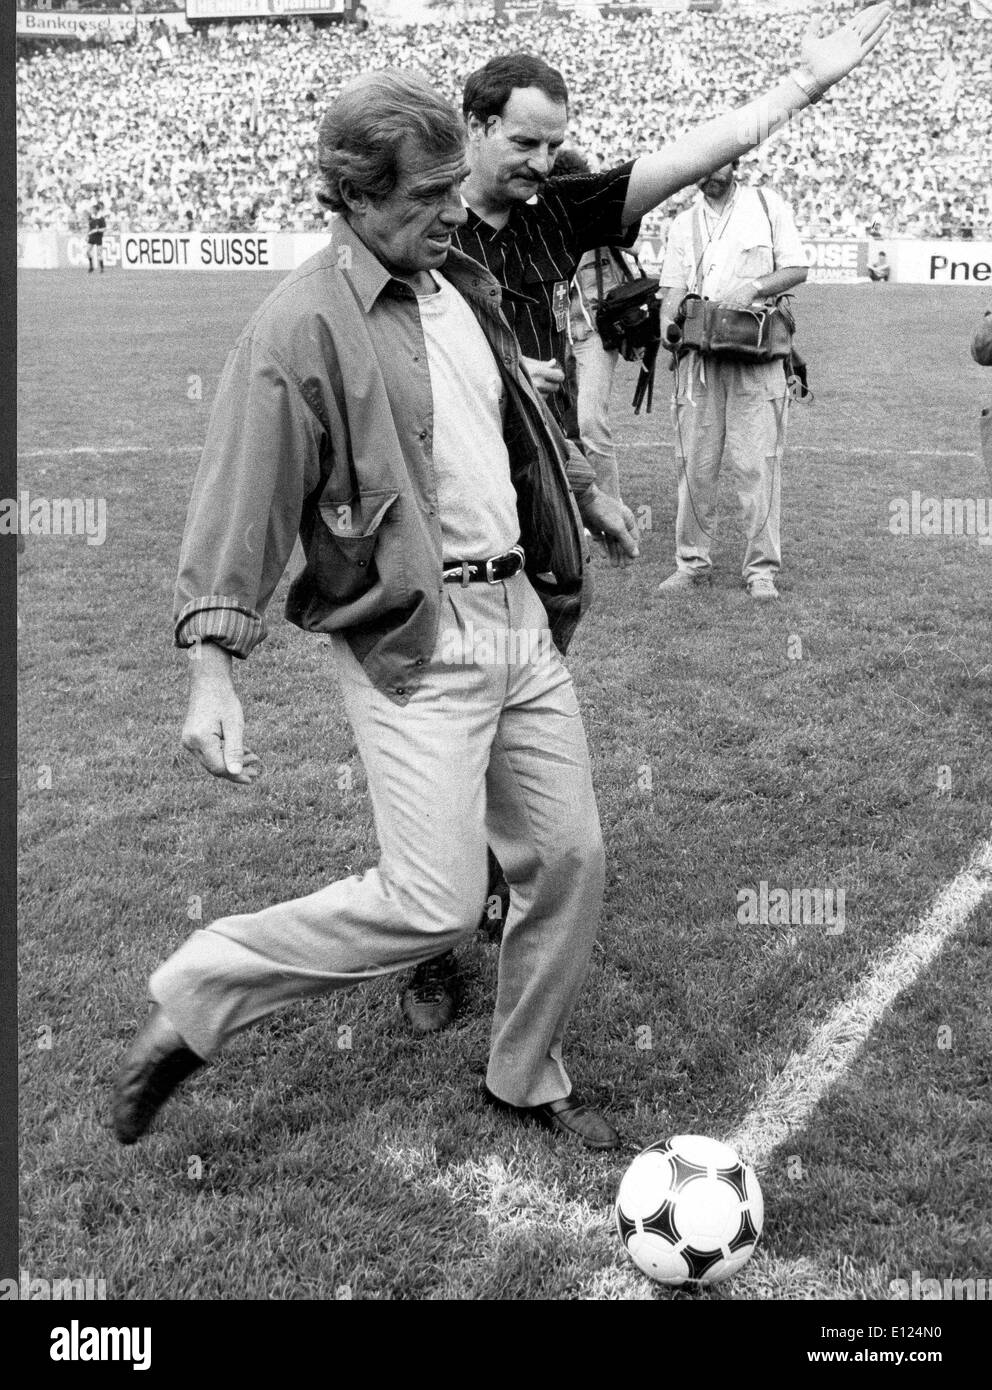 Actor Jean-Paul Belmondo kicks soccer ball Stock Photo